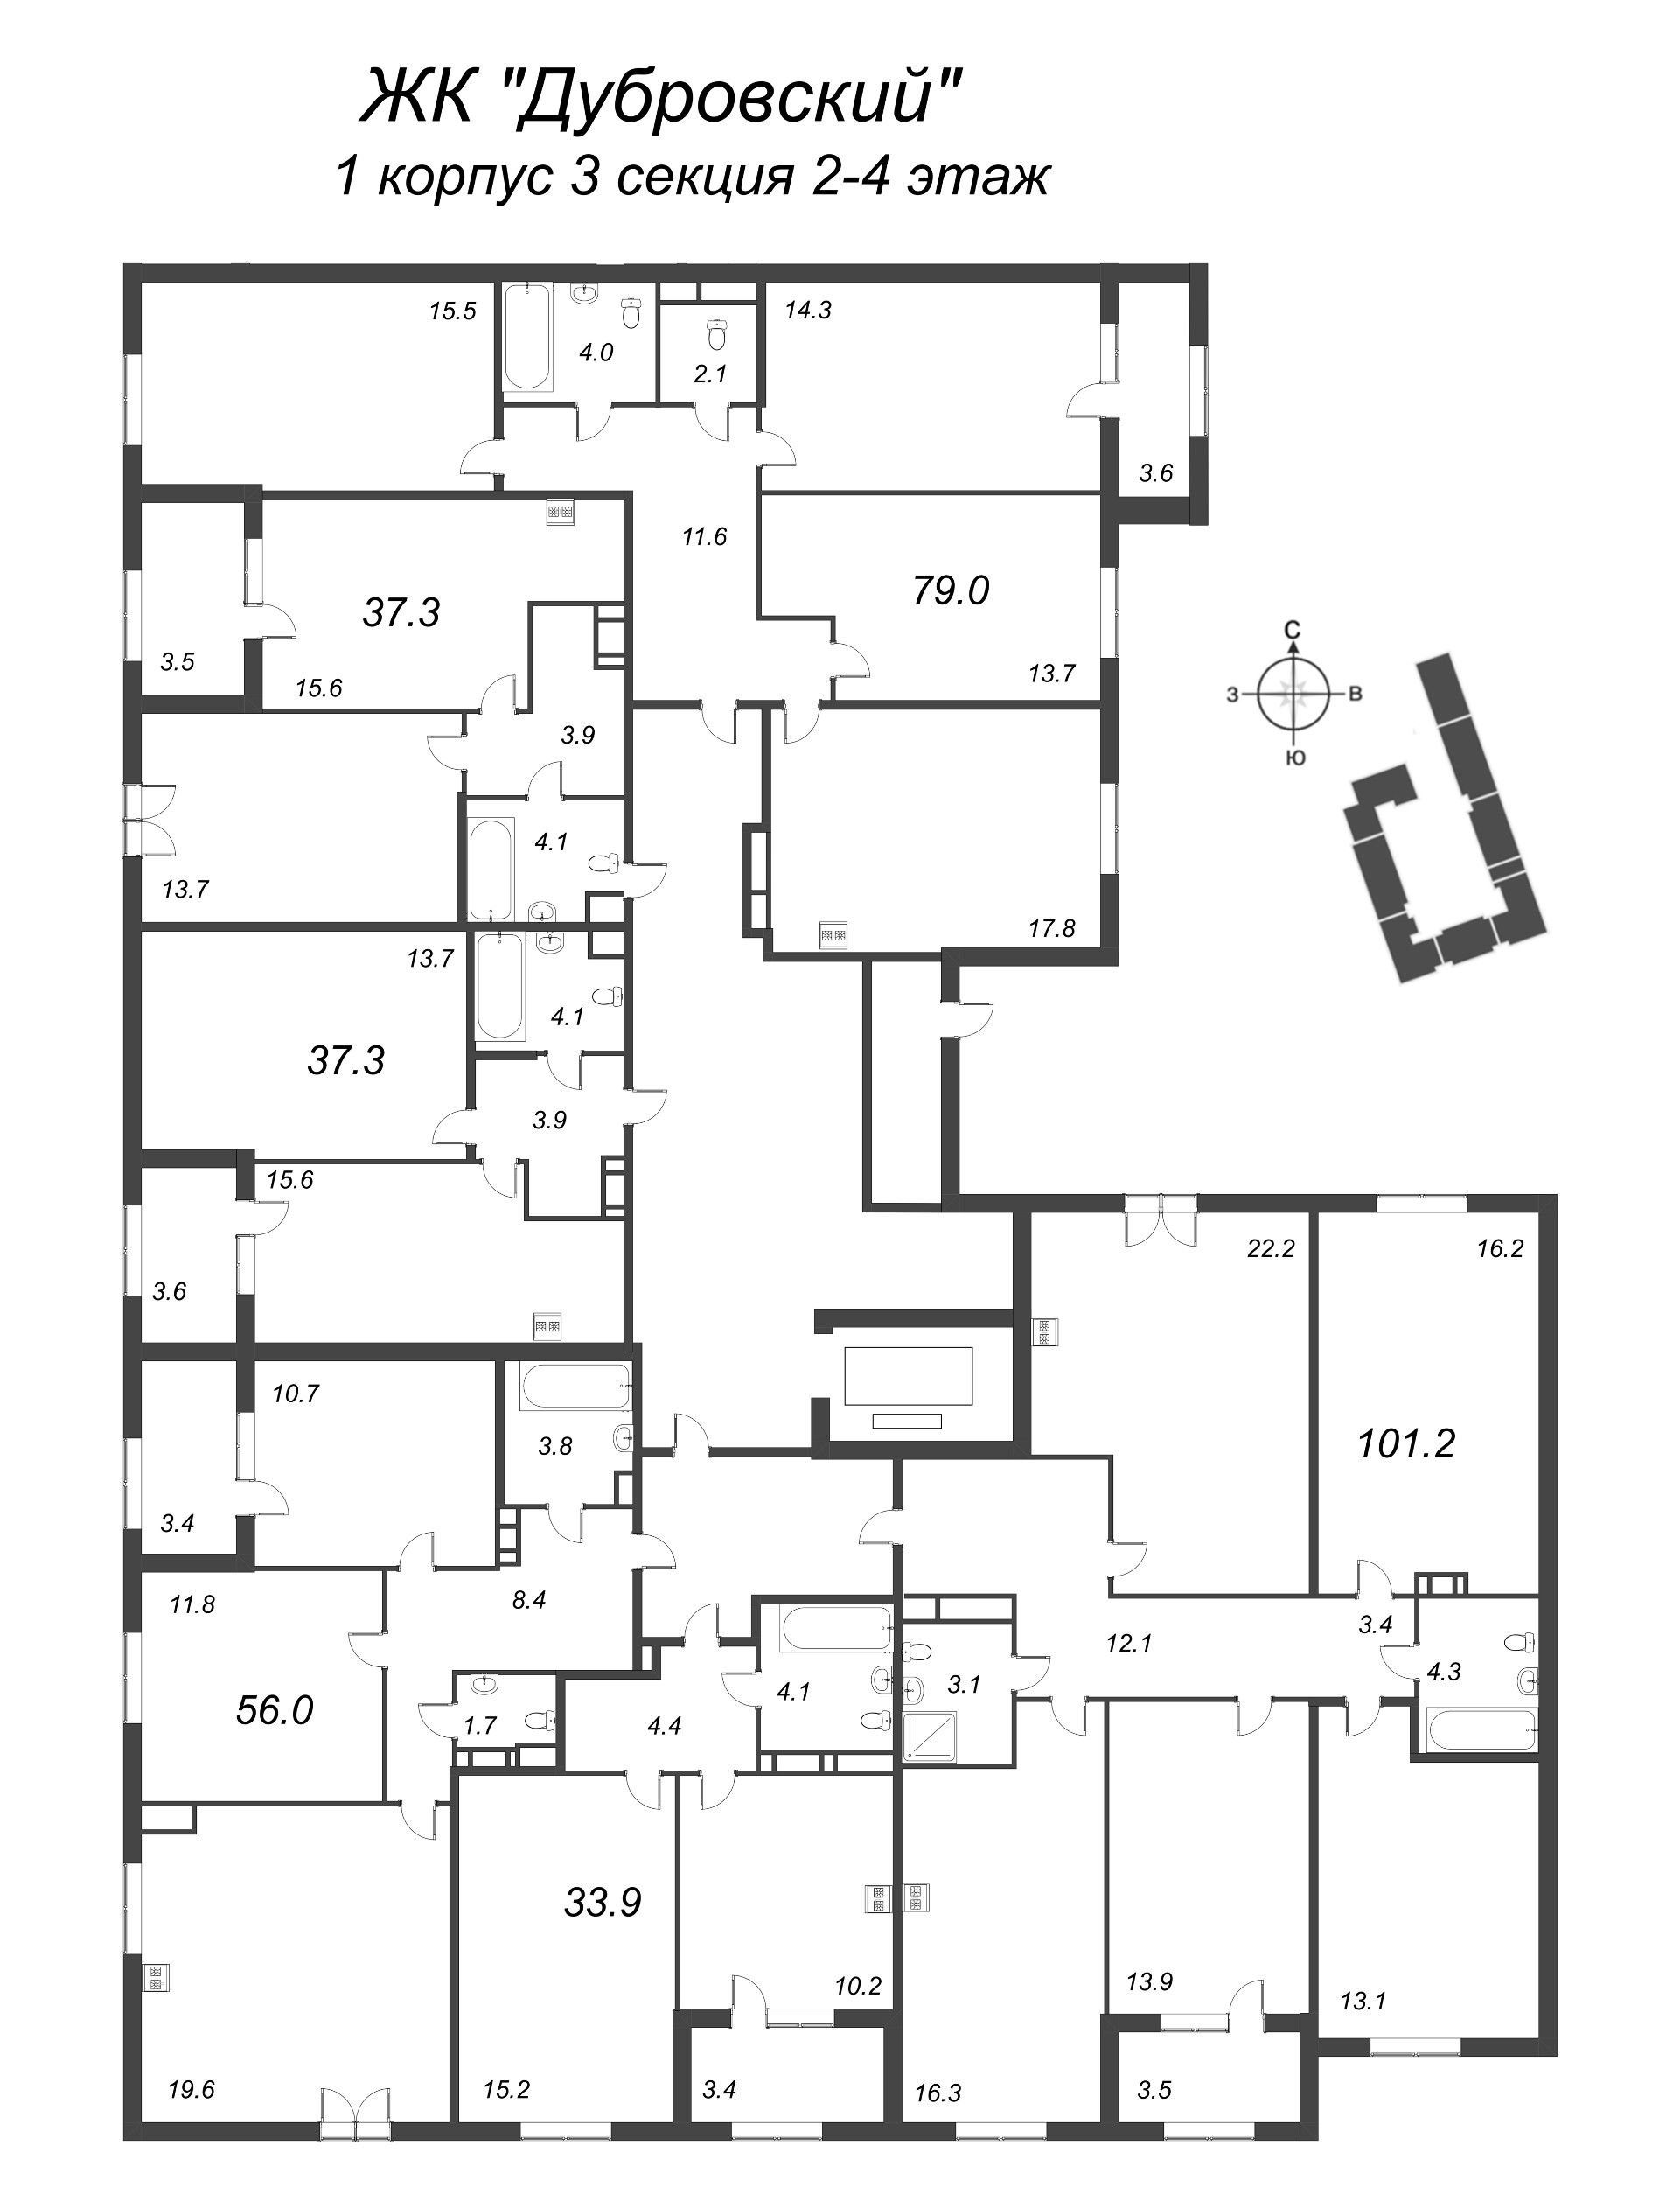 5-комнатная (Евро) квартира, 101.2 м² - планировка этажа